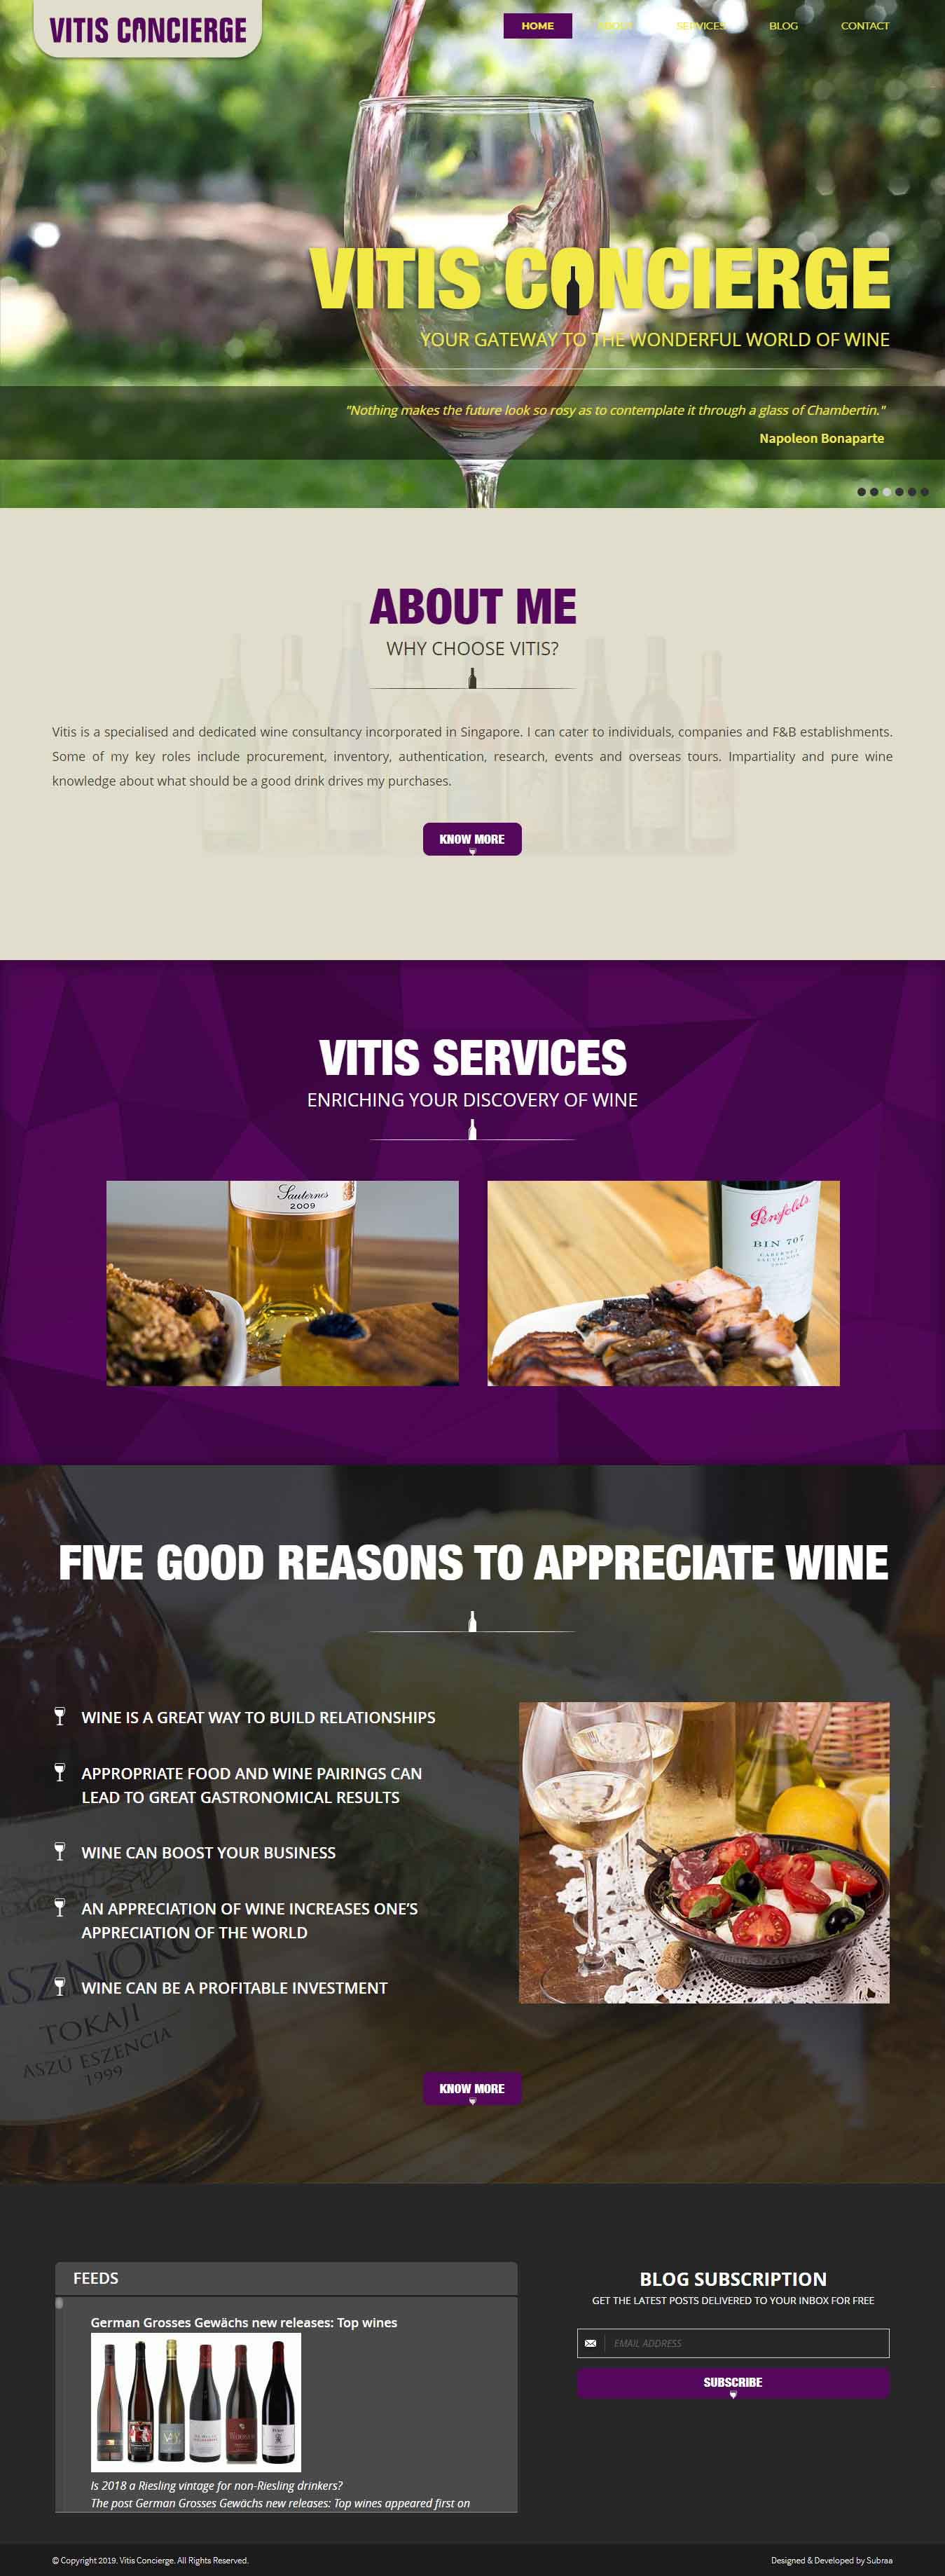 Vitis Concierge CMS WordPress Website Design and Development